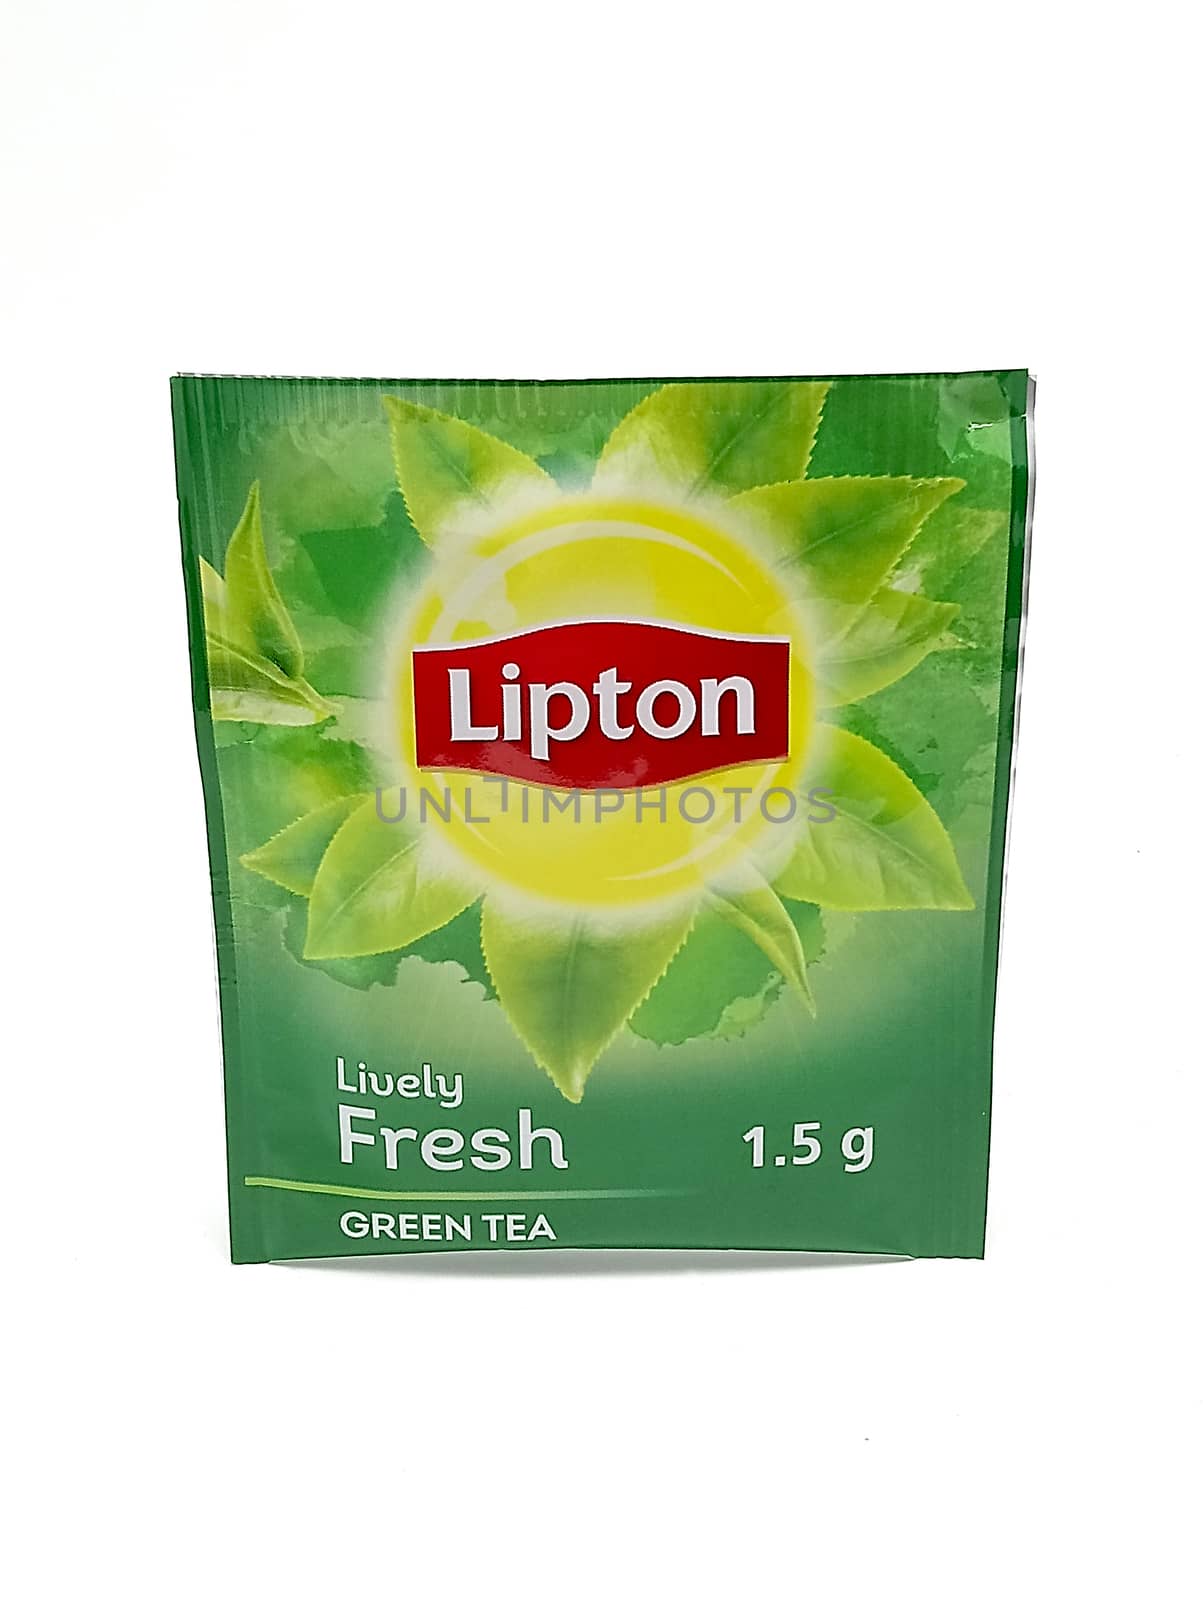 MANILA, PH - JUNE 23 - Lipton green tea on June 23, 2020 in Manila, Philippines.